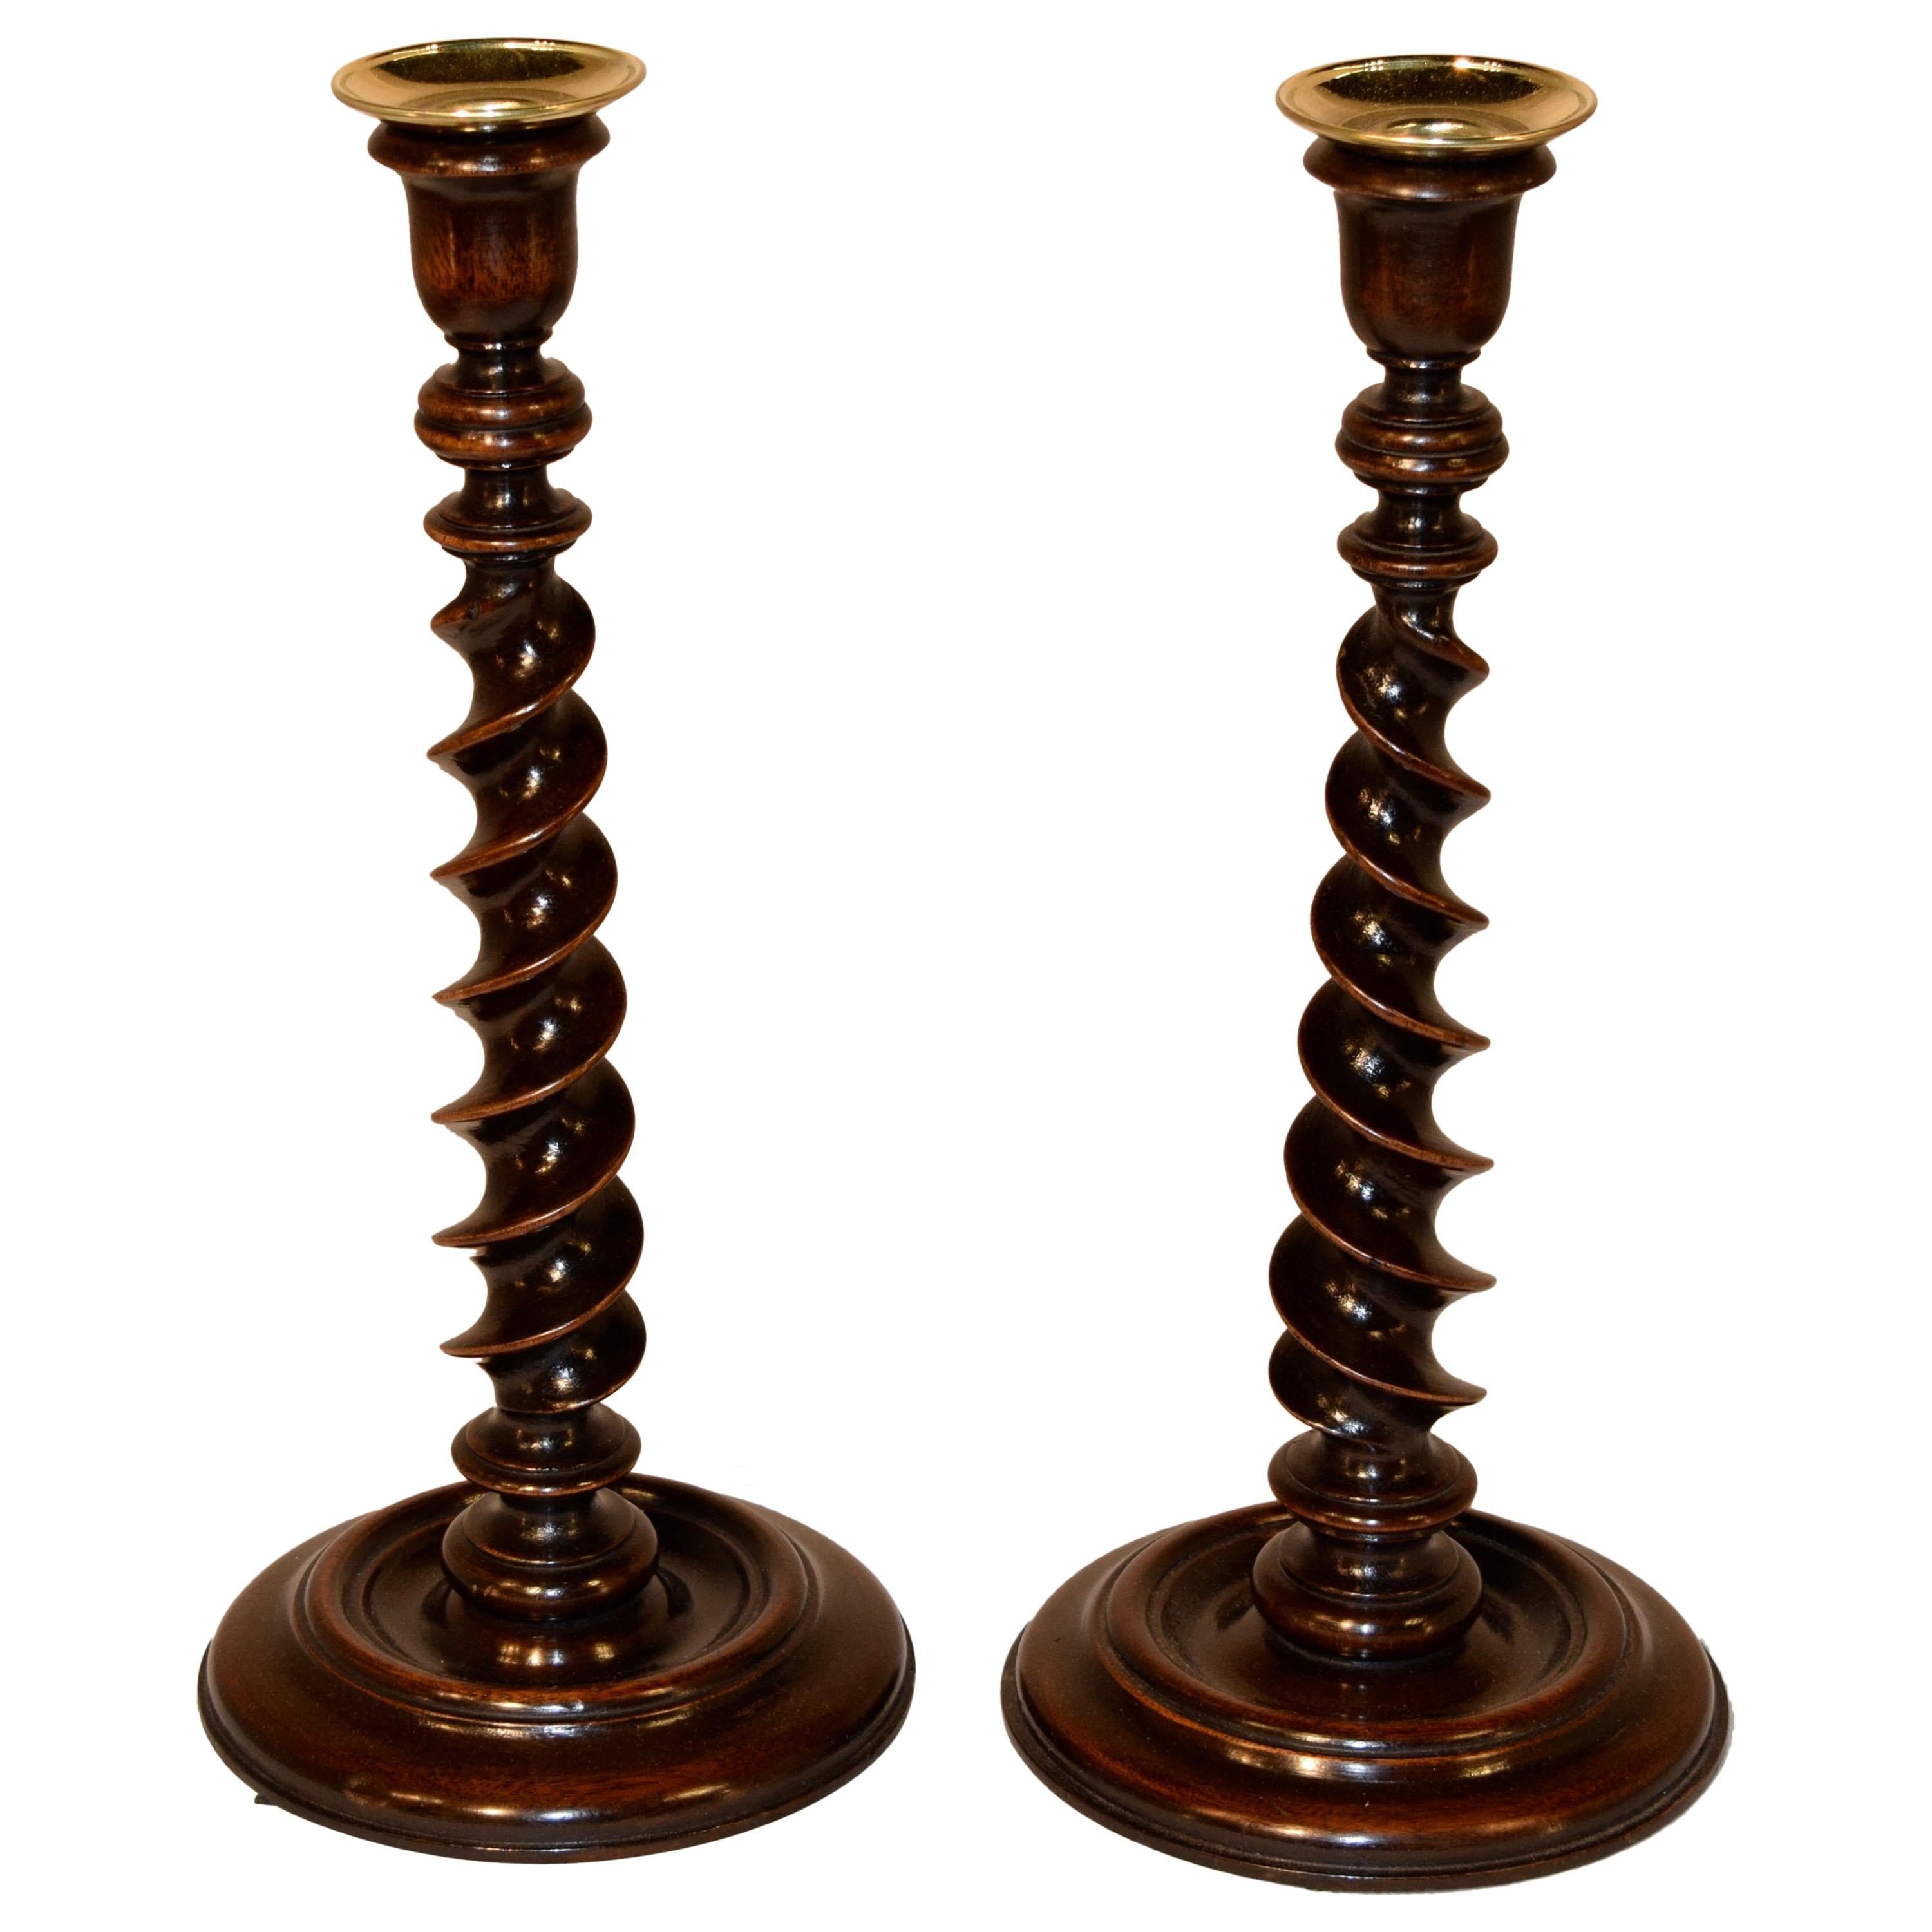 Pair of Unusual 19th Century Ribbon Candlesticks